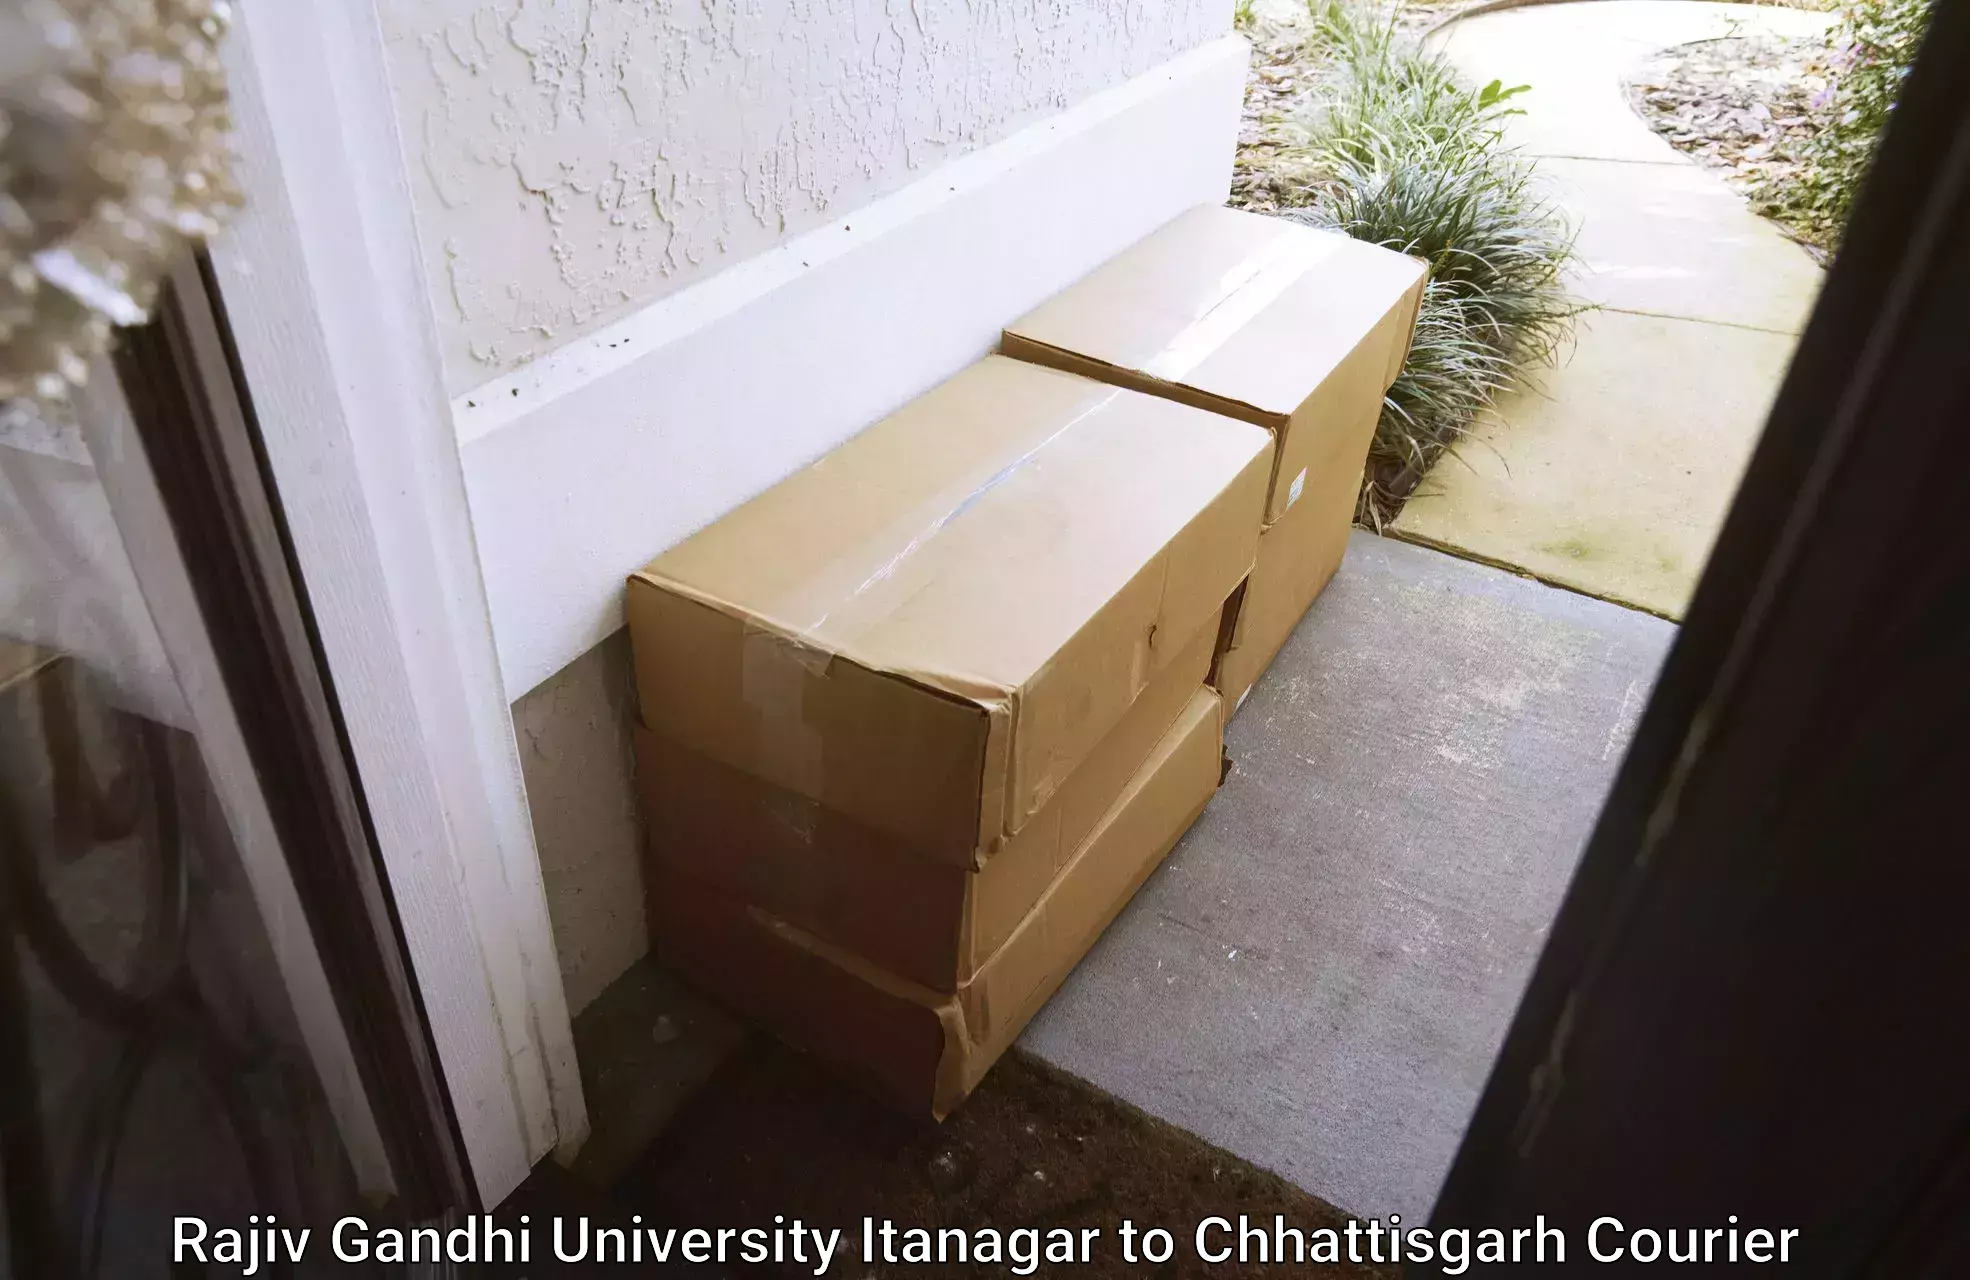 Parcel handling and care Rajiv Gandhi University Itanagar to Raigarh Chhattisgarh